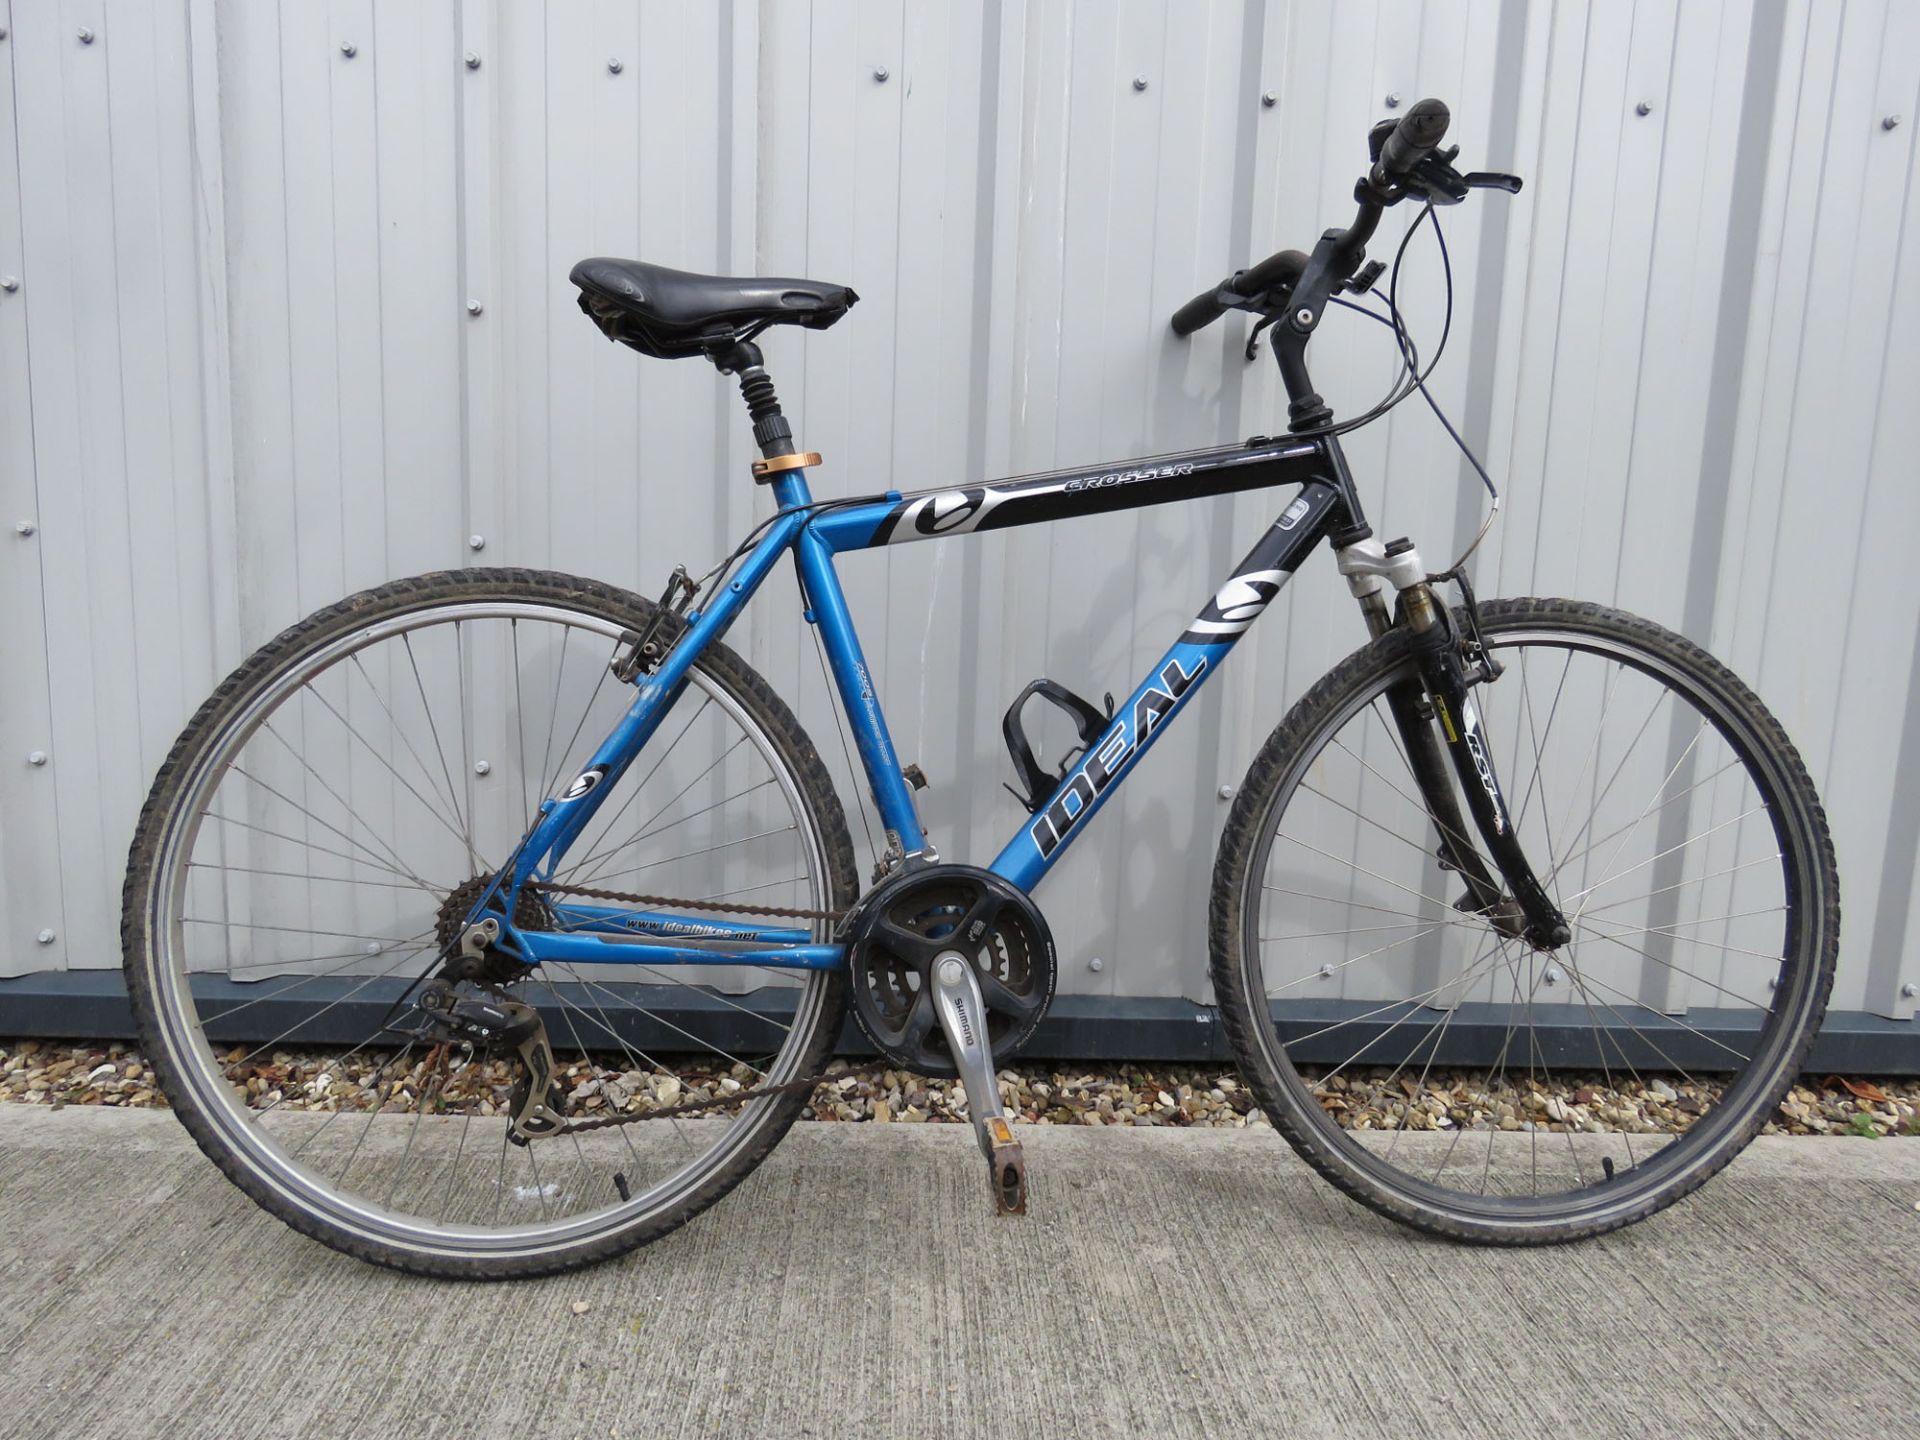 4021 Cross mountain bike in black and blue